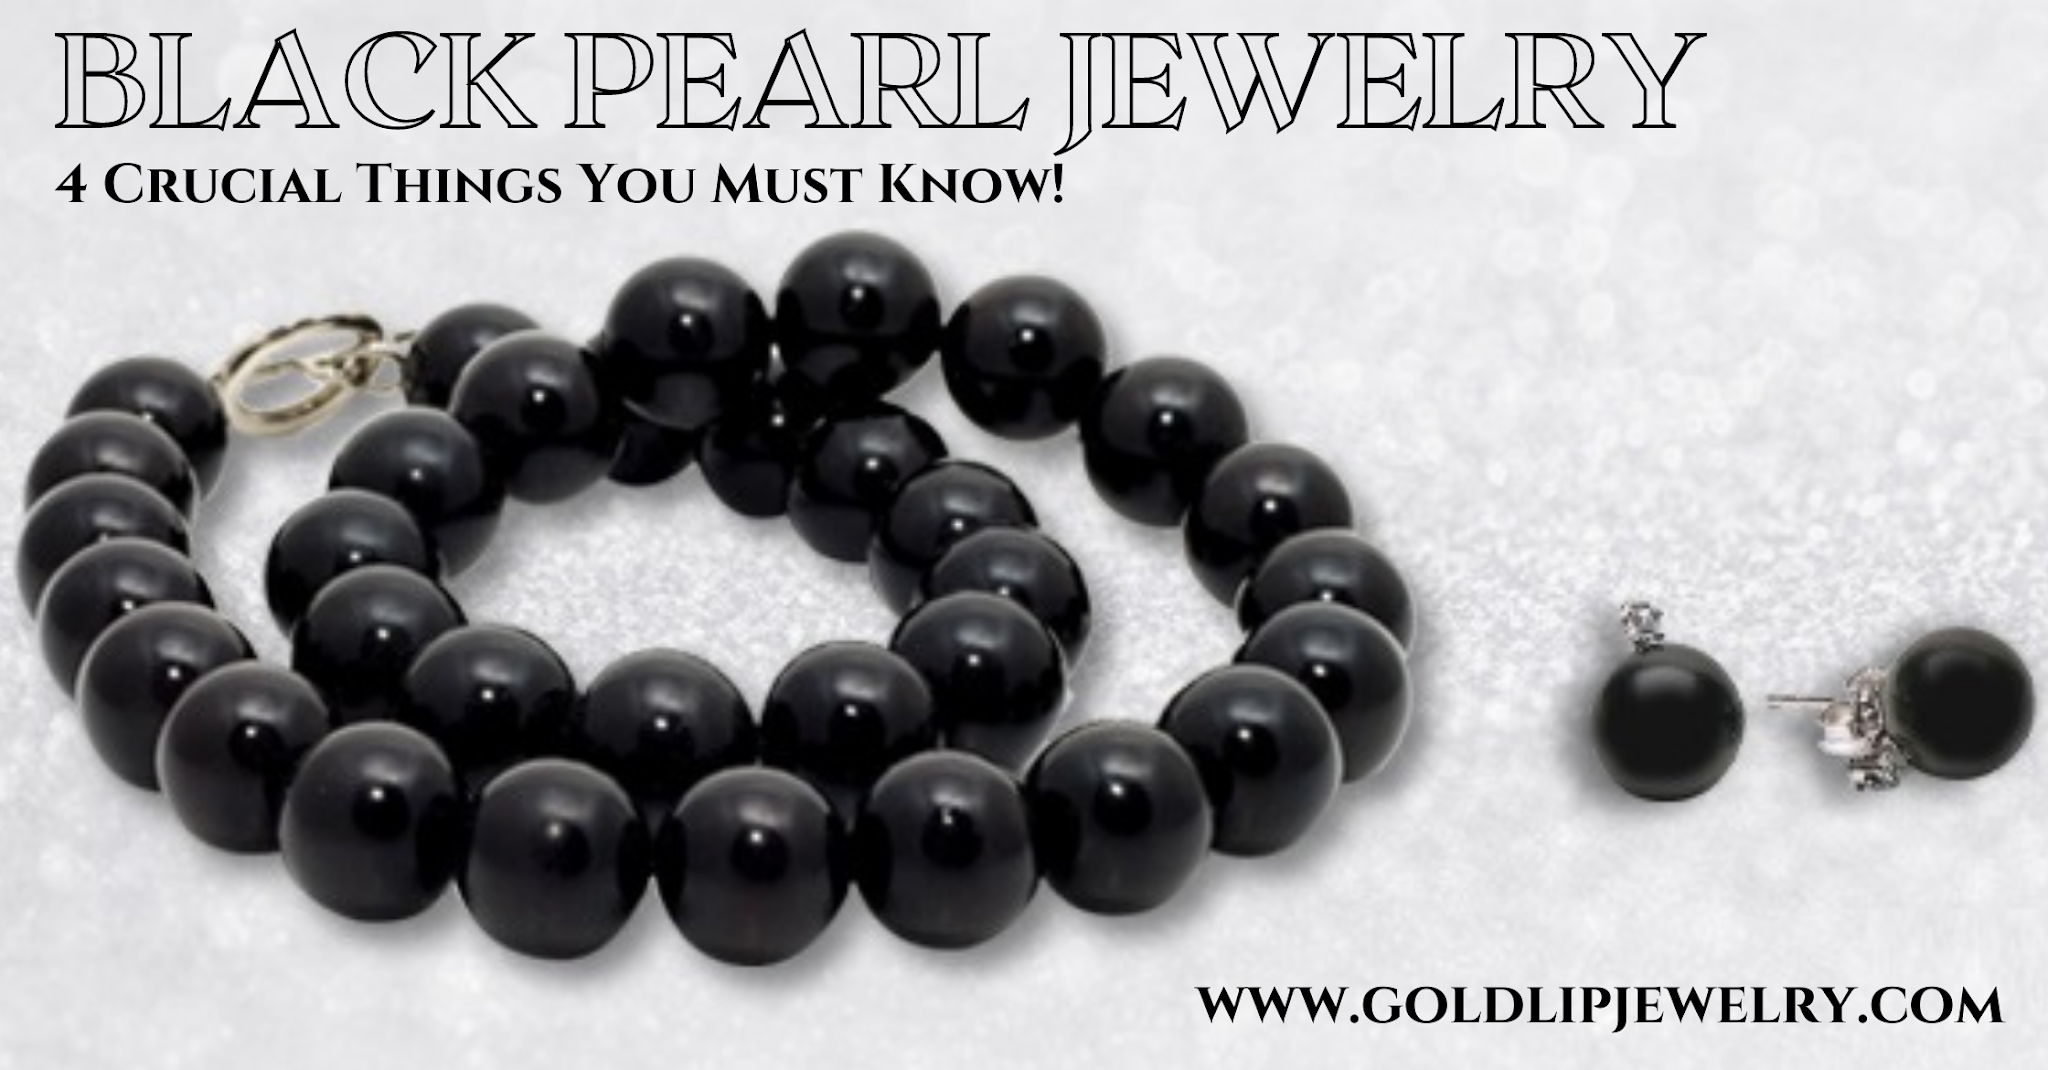 Black Pearl Jewelry Online